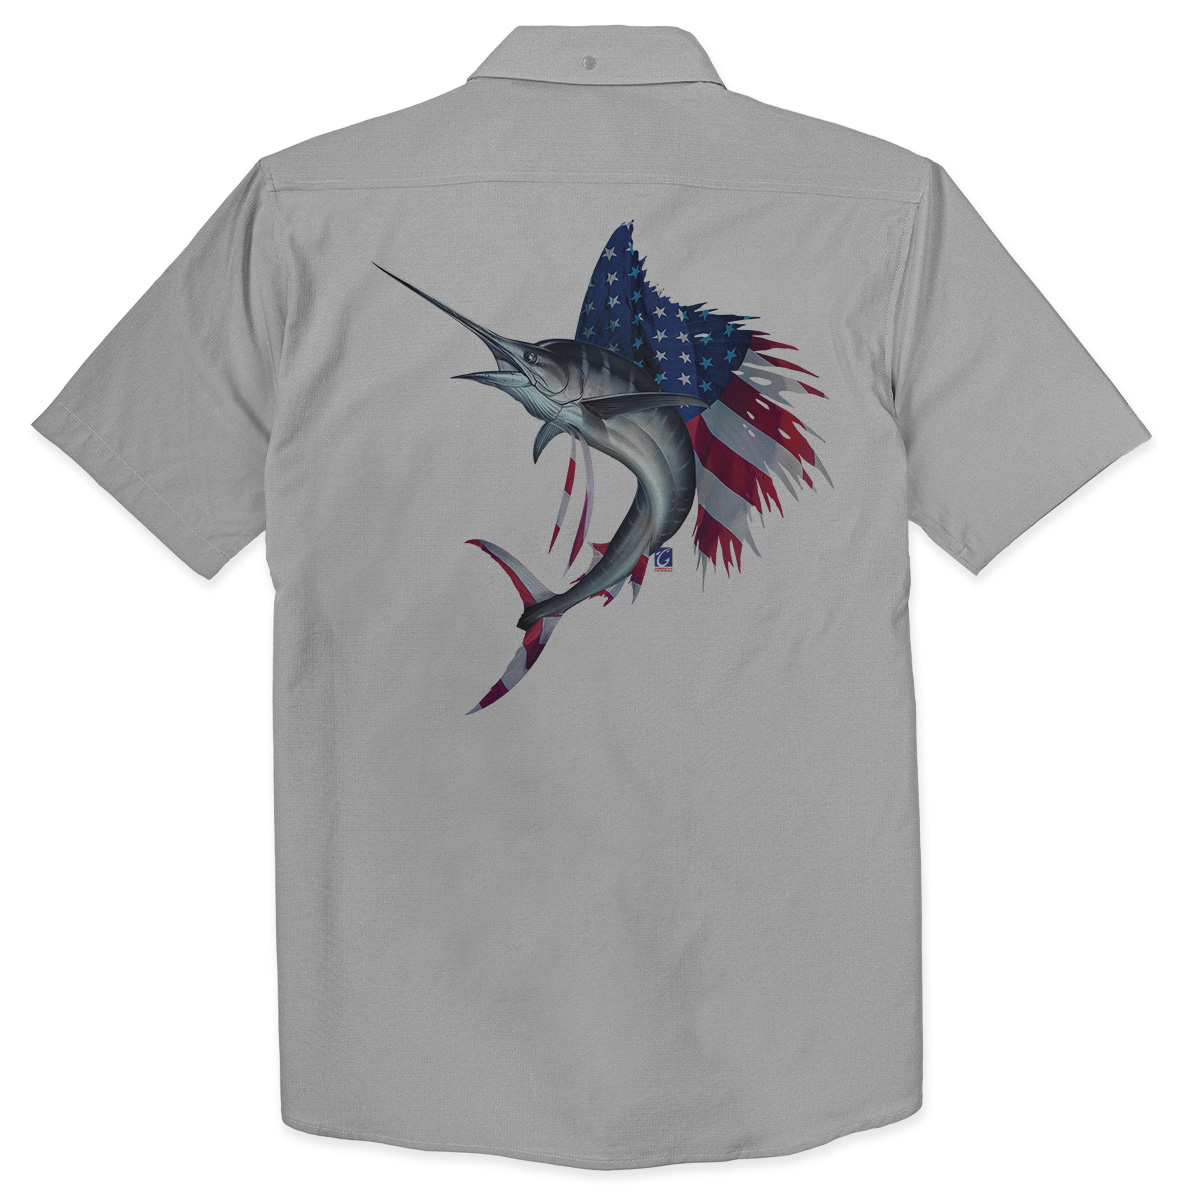  Sailfish Fishing Shirts For Men : Clothing, Shoes